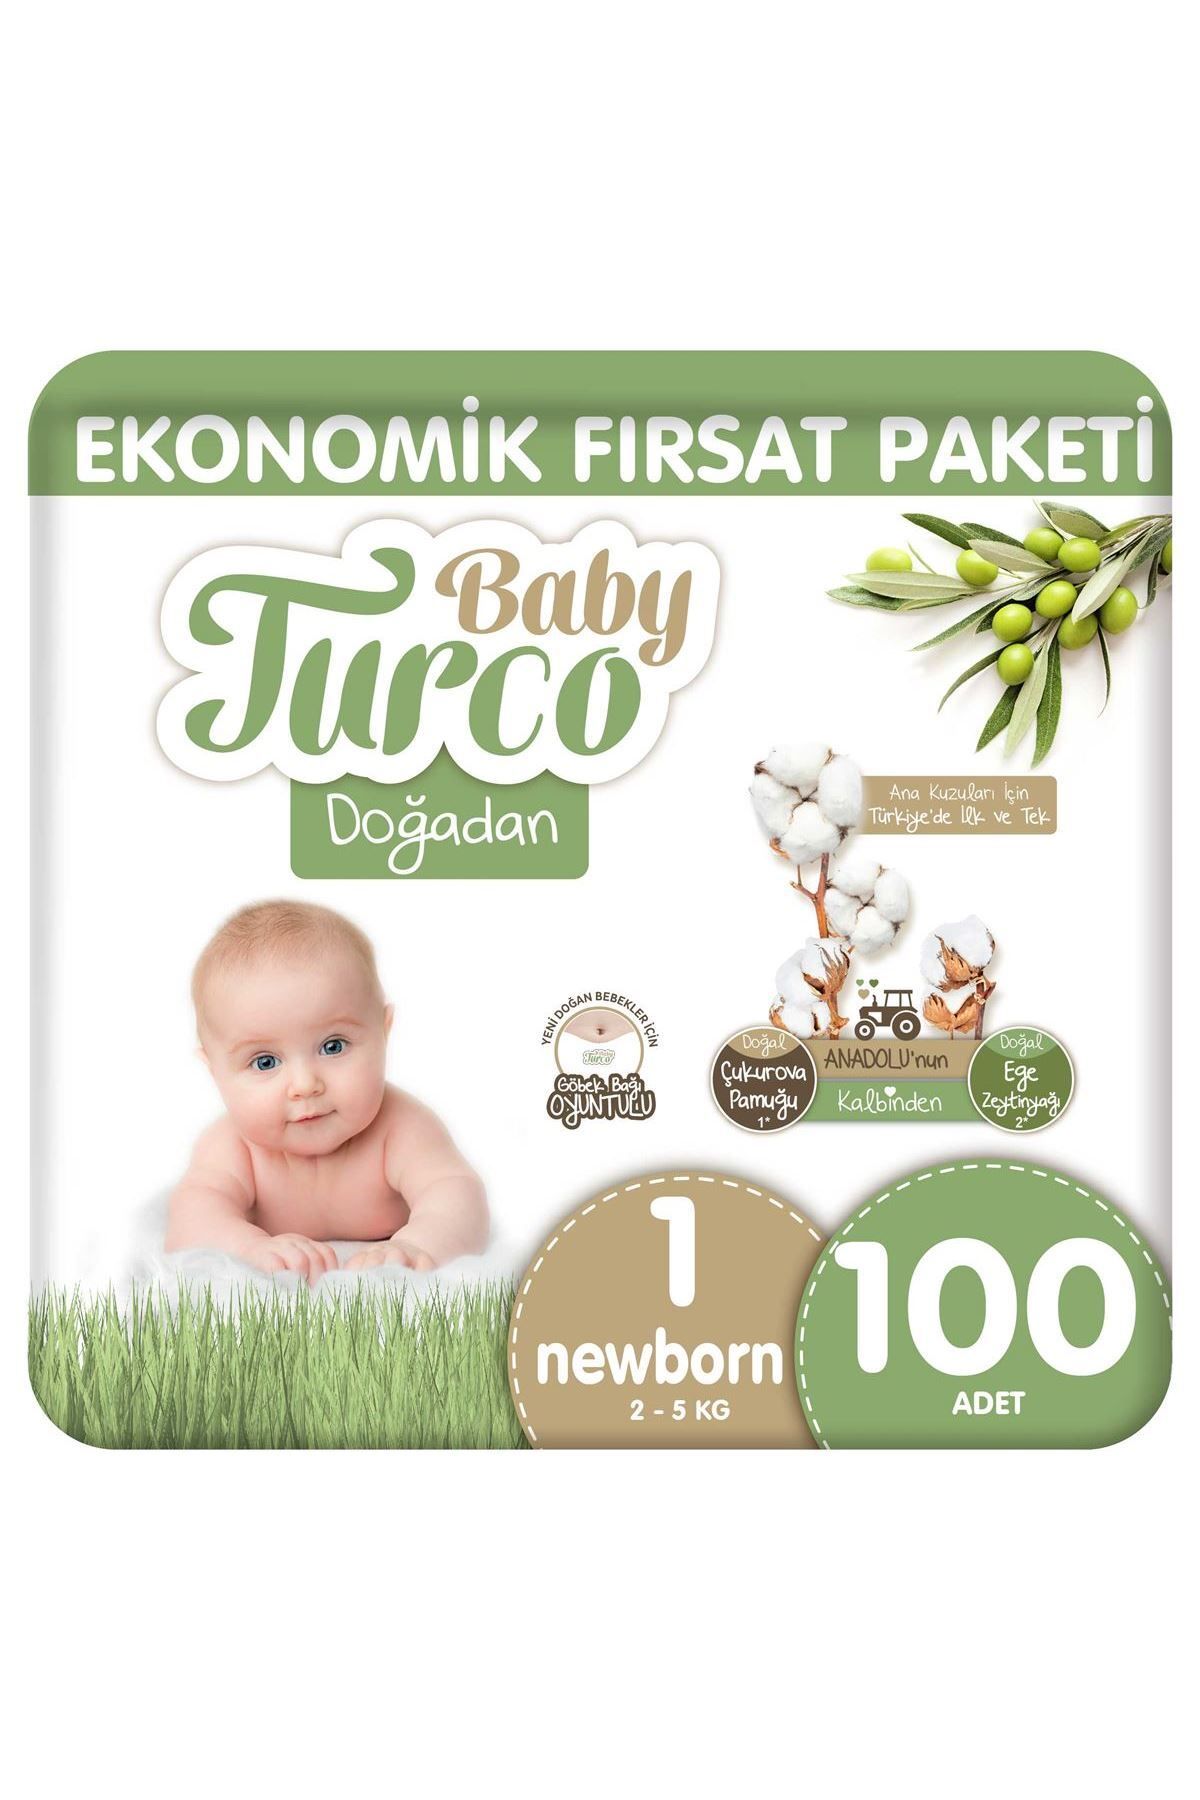 Baby Turco Doğadan Ekonomik Fırsat Paketi Bebek Bezi 1 Numara Newborn 100 Adet